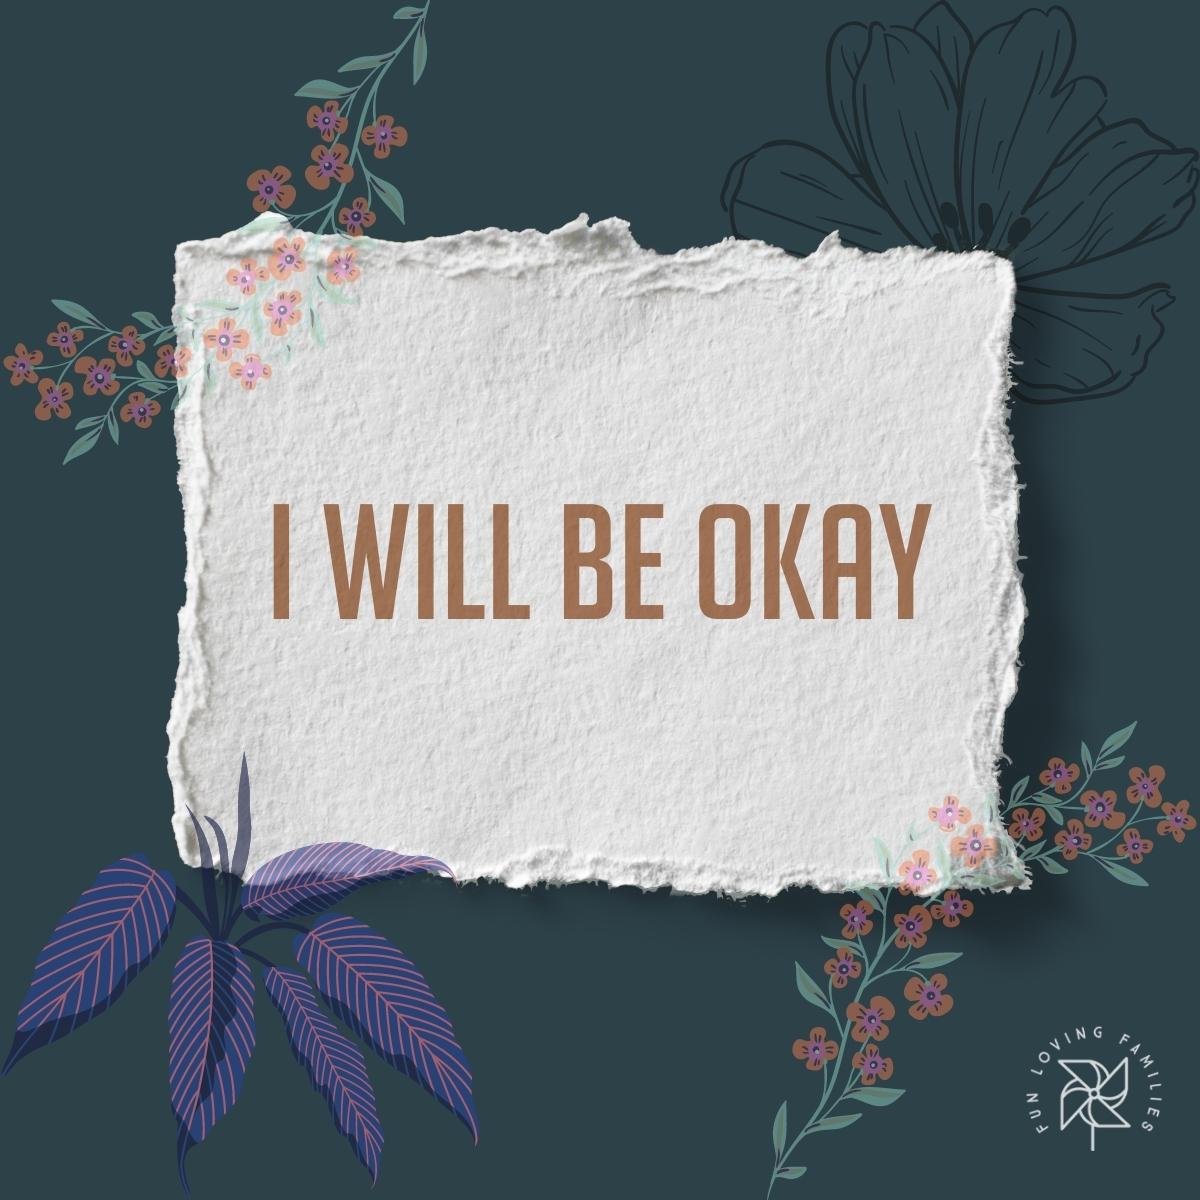 I will be okay affirmation